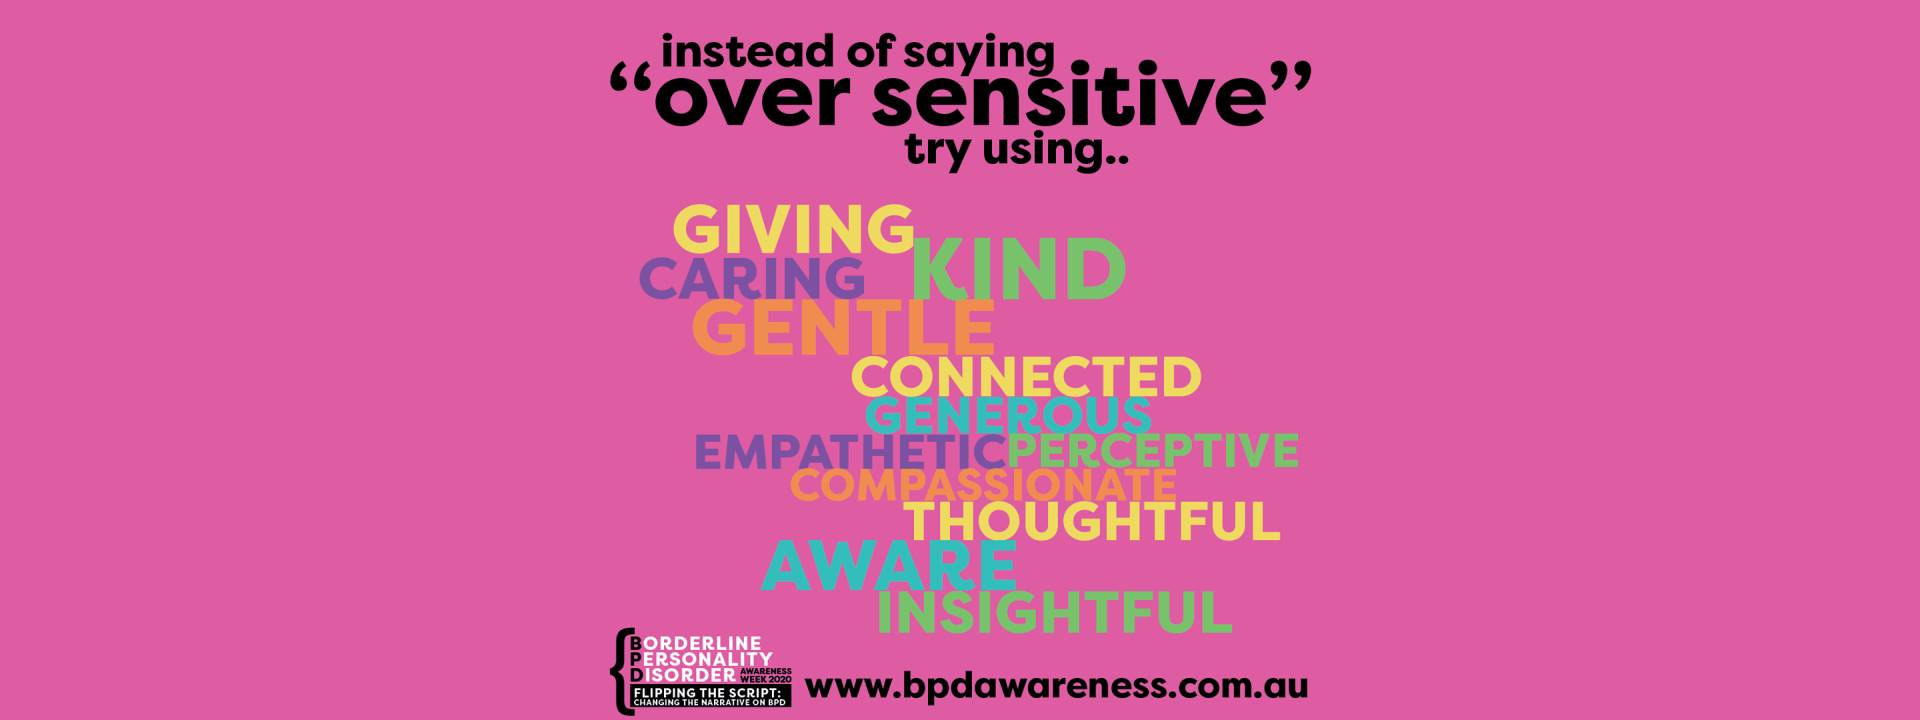 BPD Awareness Week 2020 - Not Over Sensitive